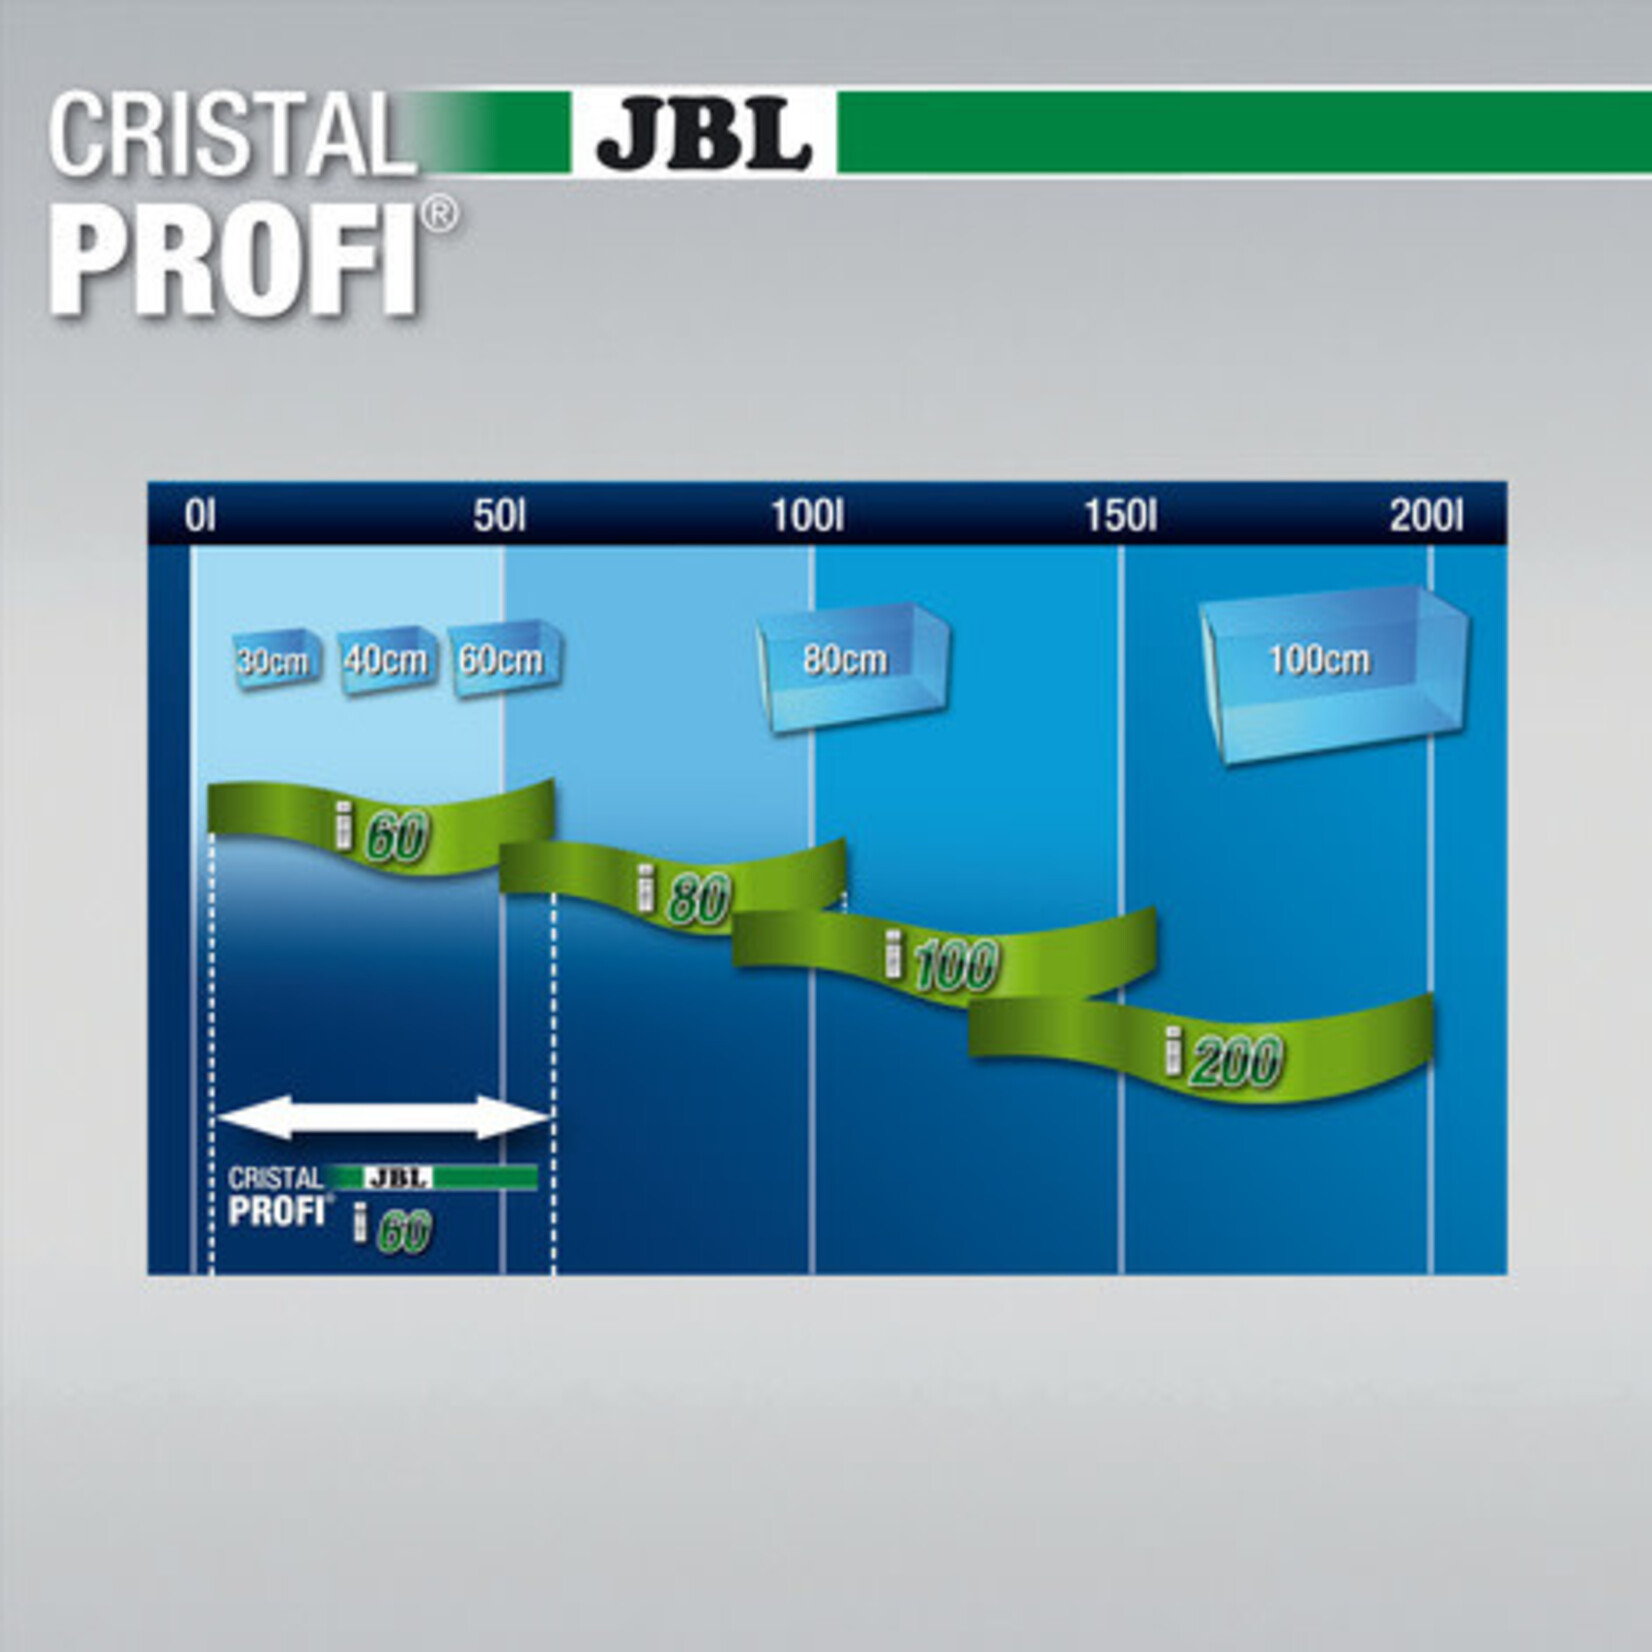 JBL JBL CRISTALPROFI i60 greenline